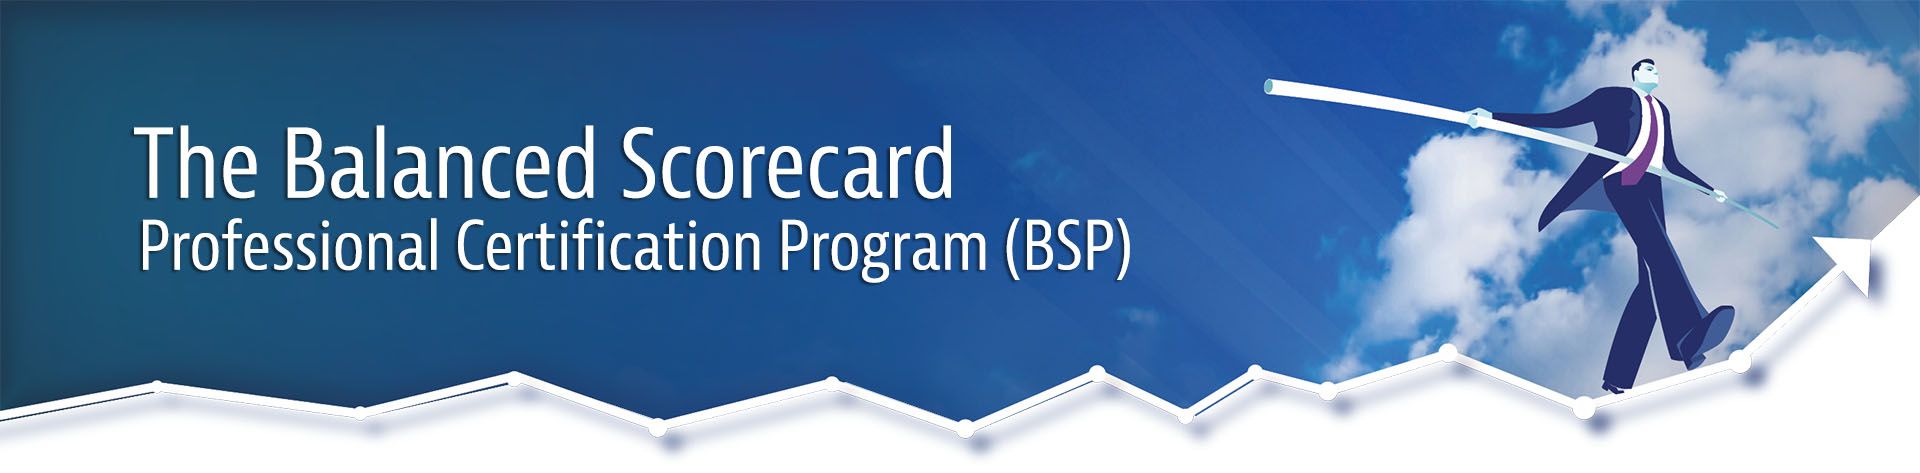 Balanced Scorecard Professional Certification